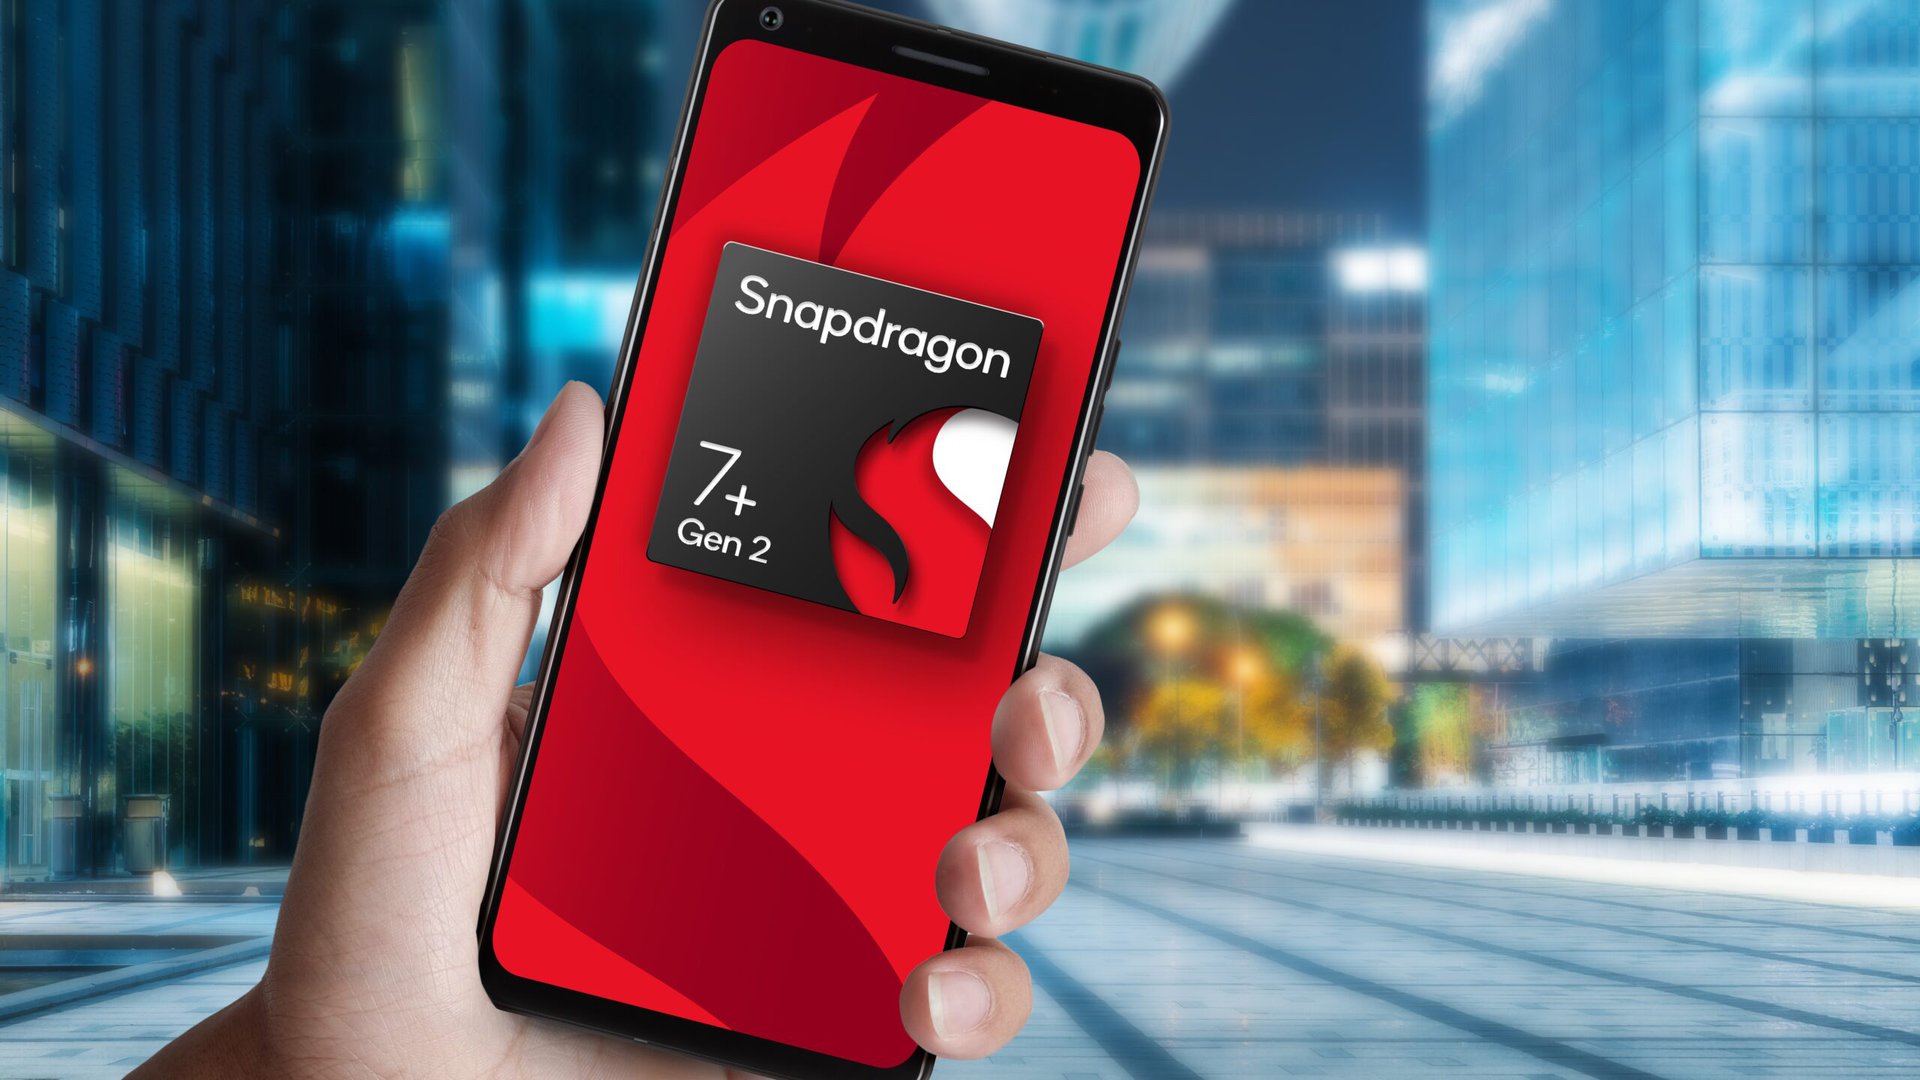 Desain referensi Snapdragon 7 Plus Gen 2